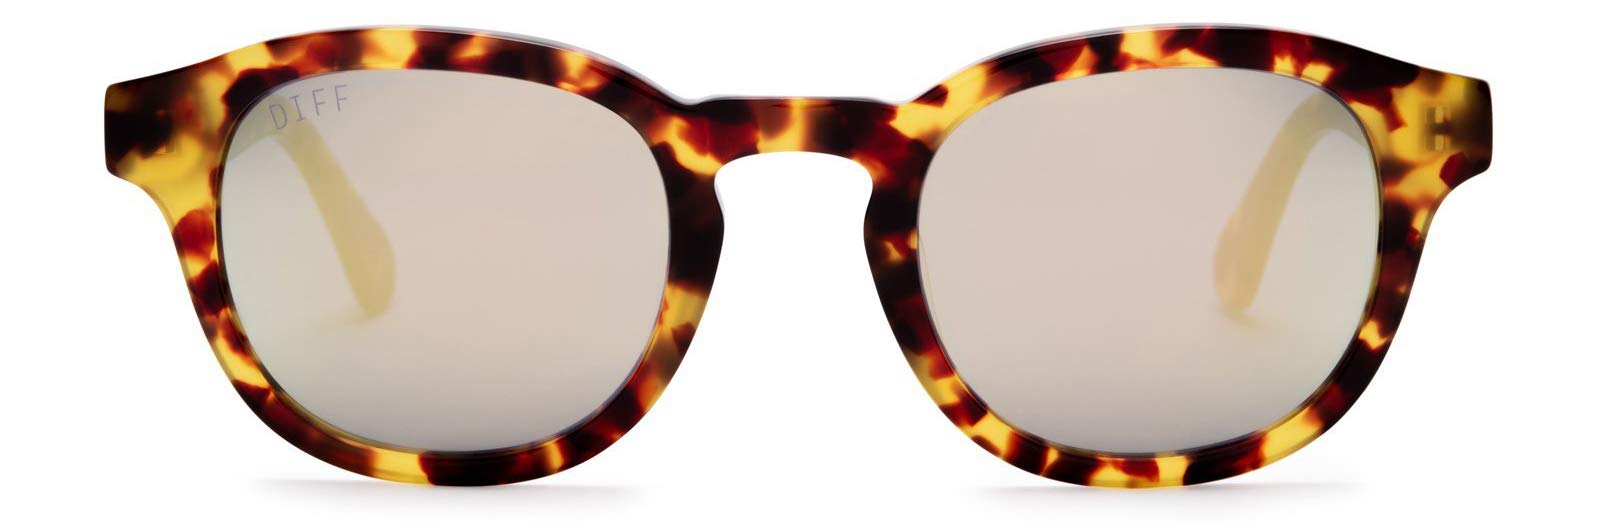 DIFF Eyewear Arlo Amber Tortoise + Gold Mirror Lens Sunglasses